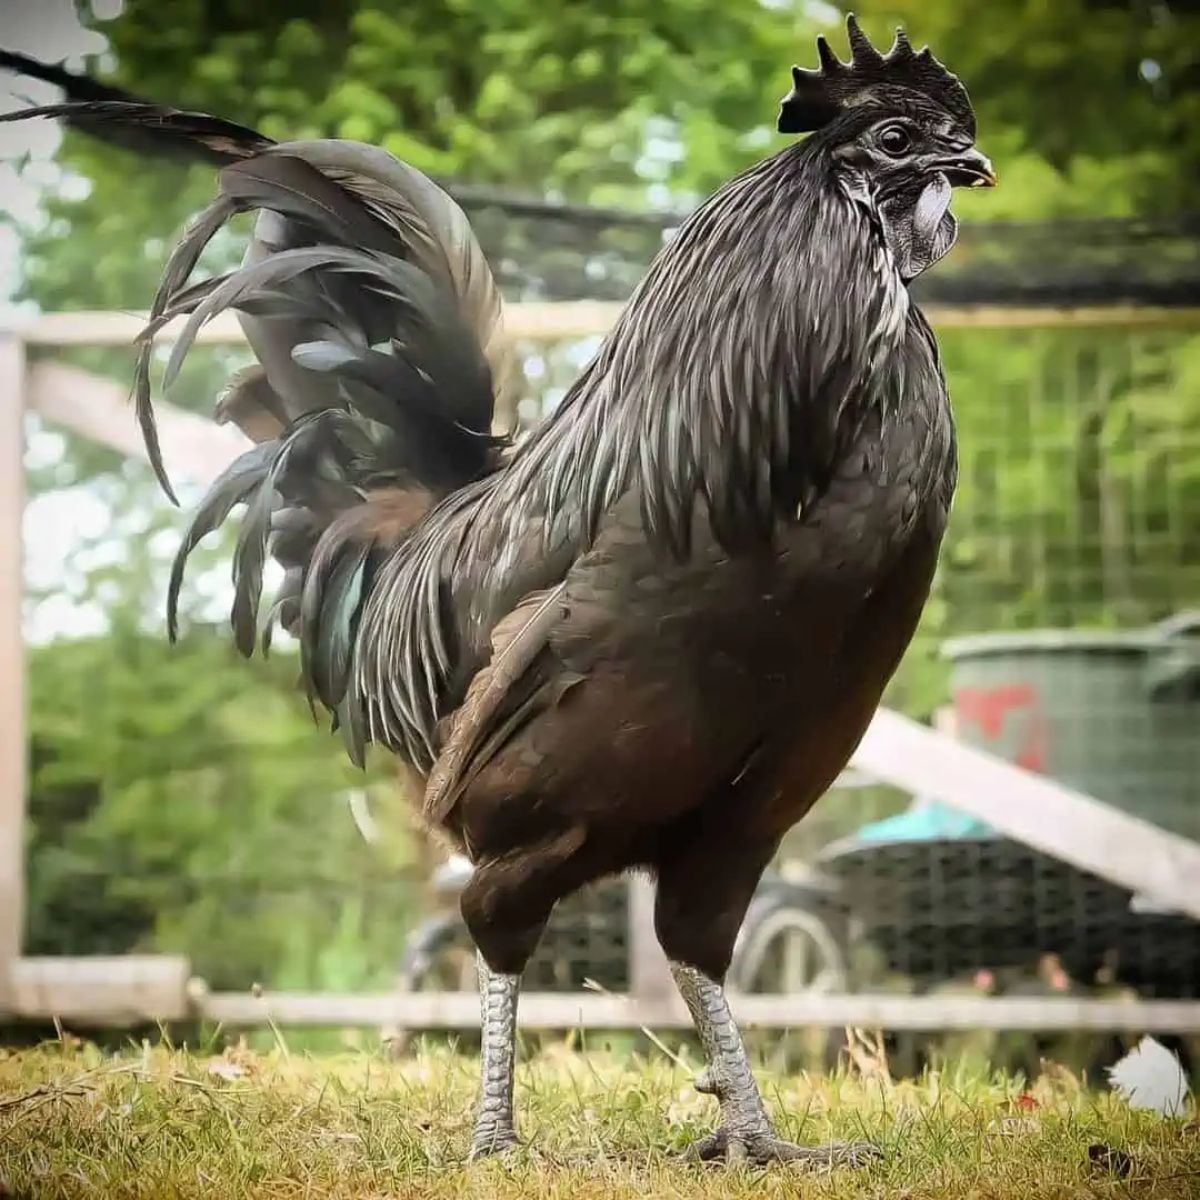 A big beautiful Swedish Black rooster in a backyard.